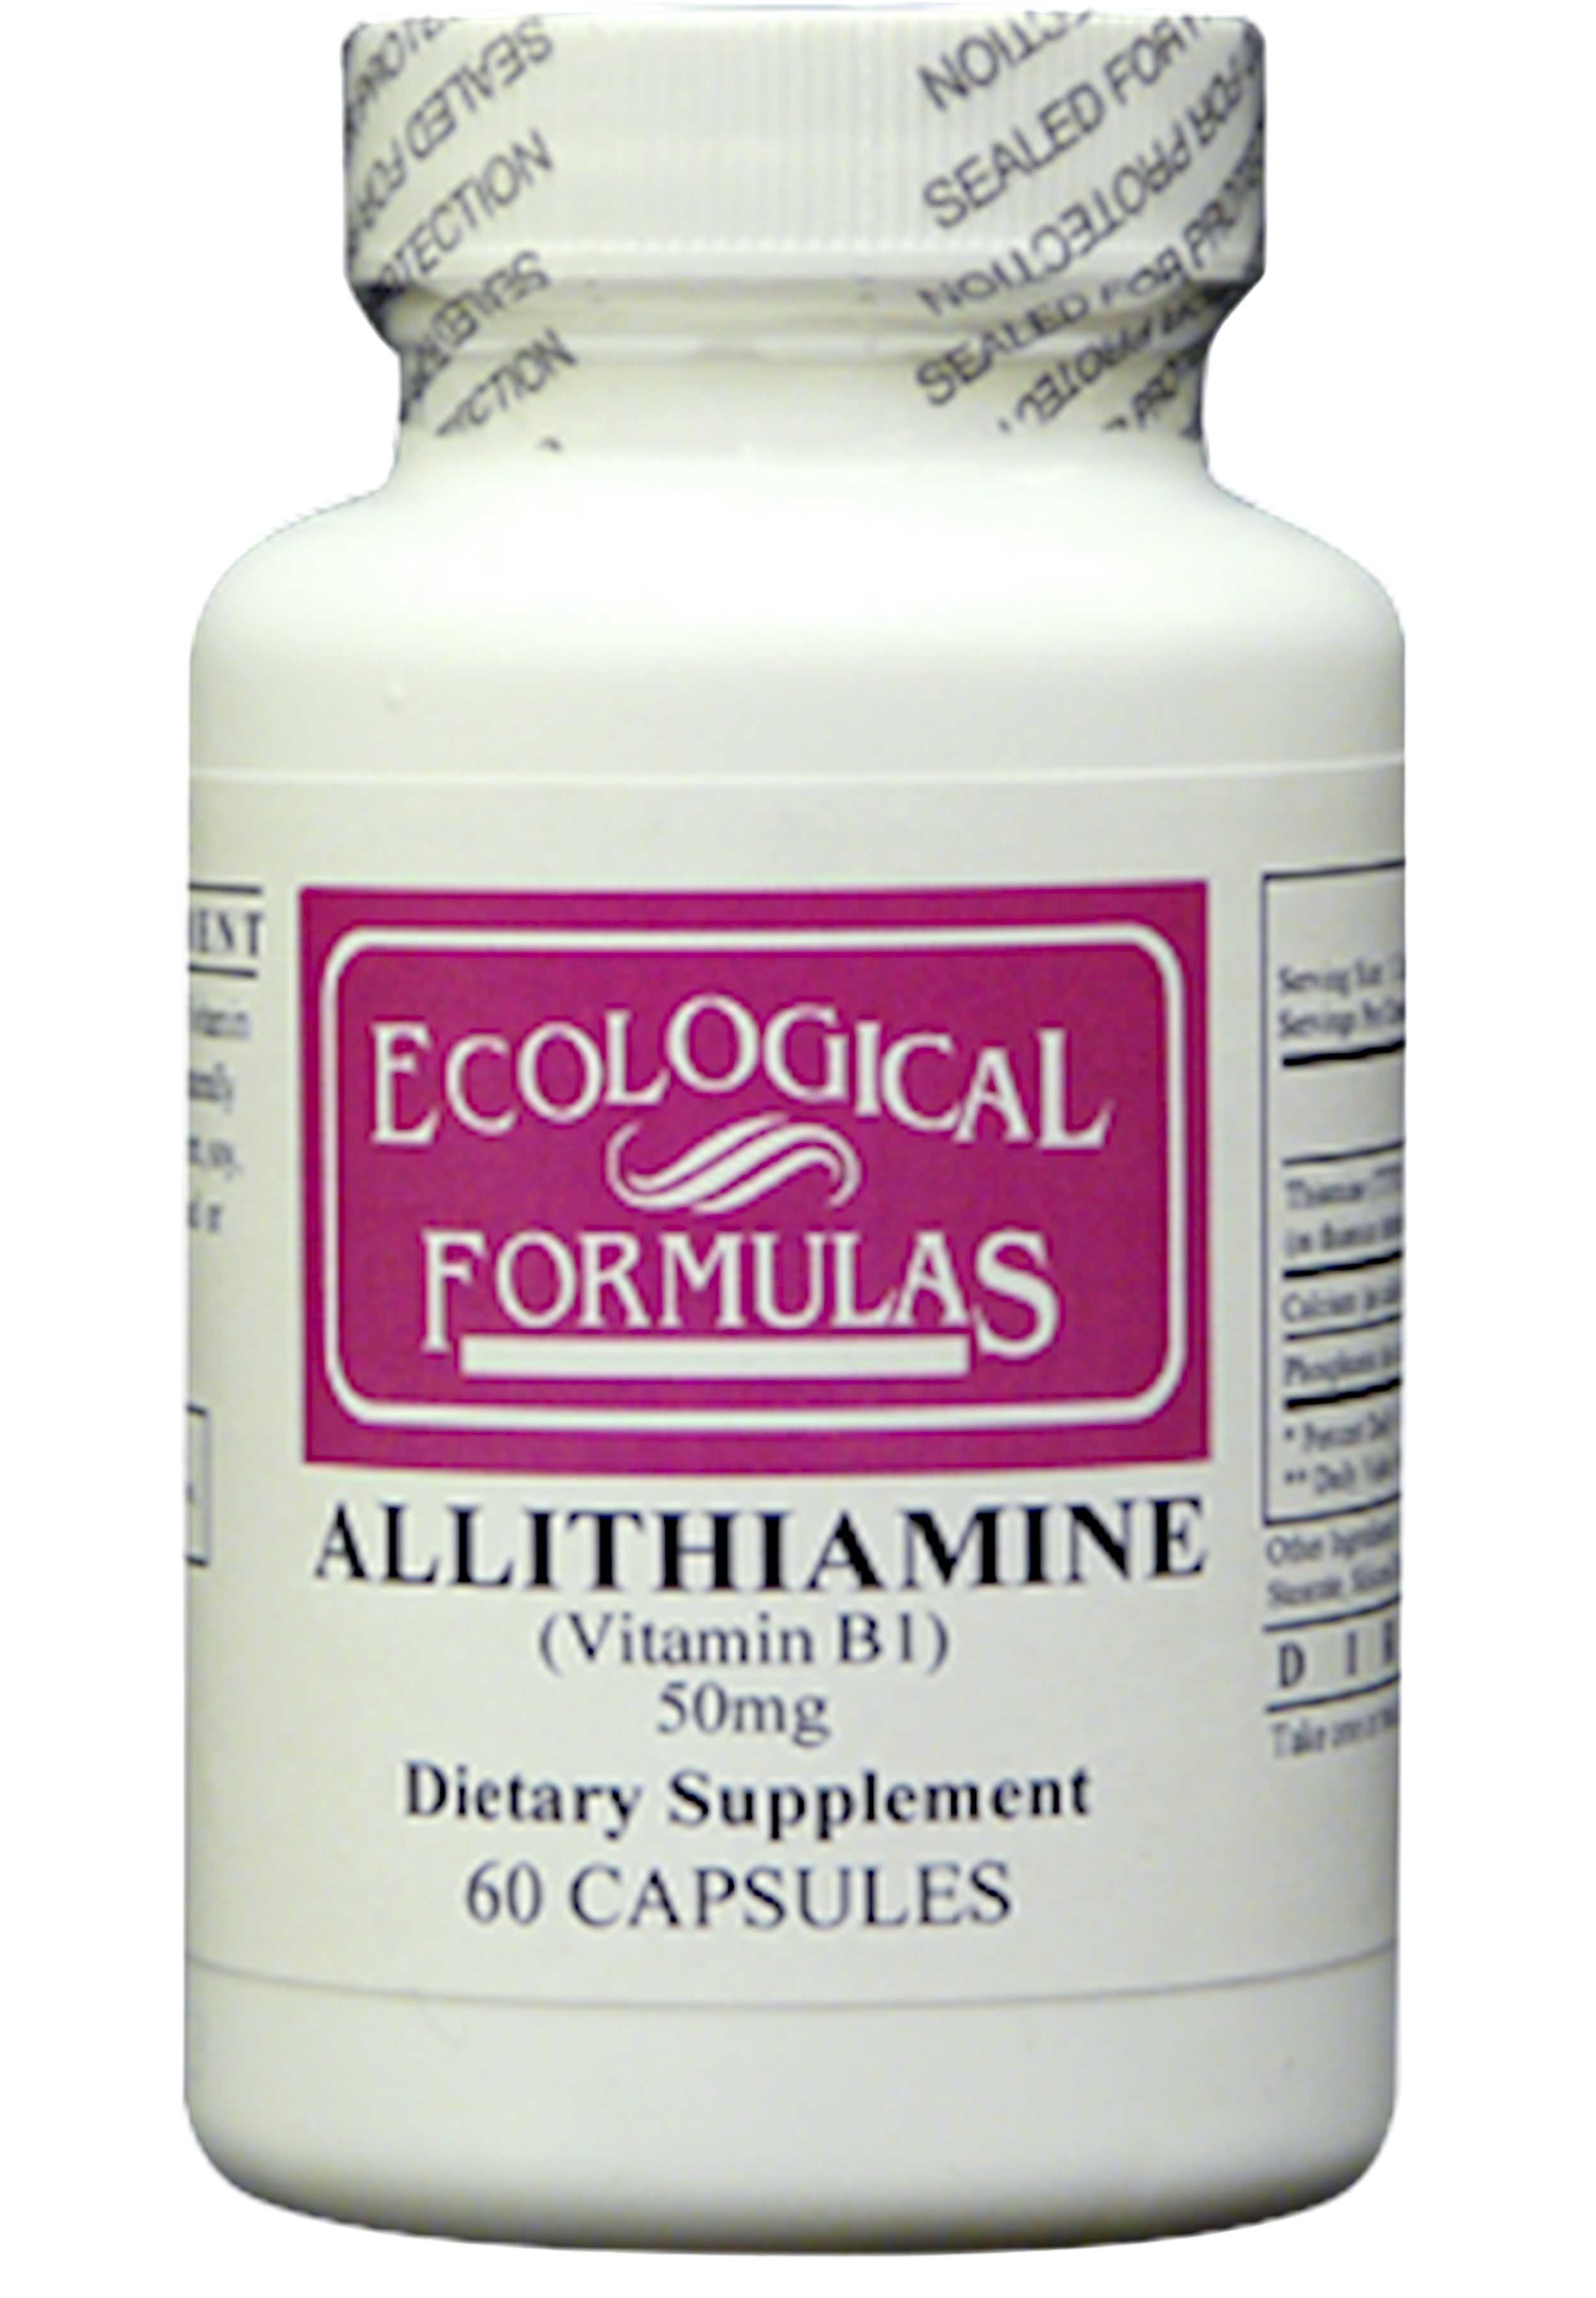 Ecological Formulas/Cardiovascular Research Allithiamine